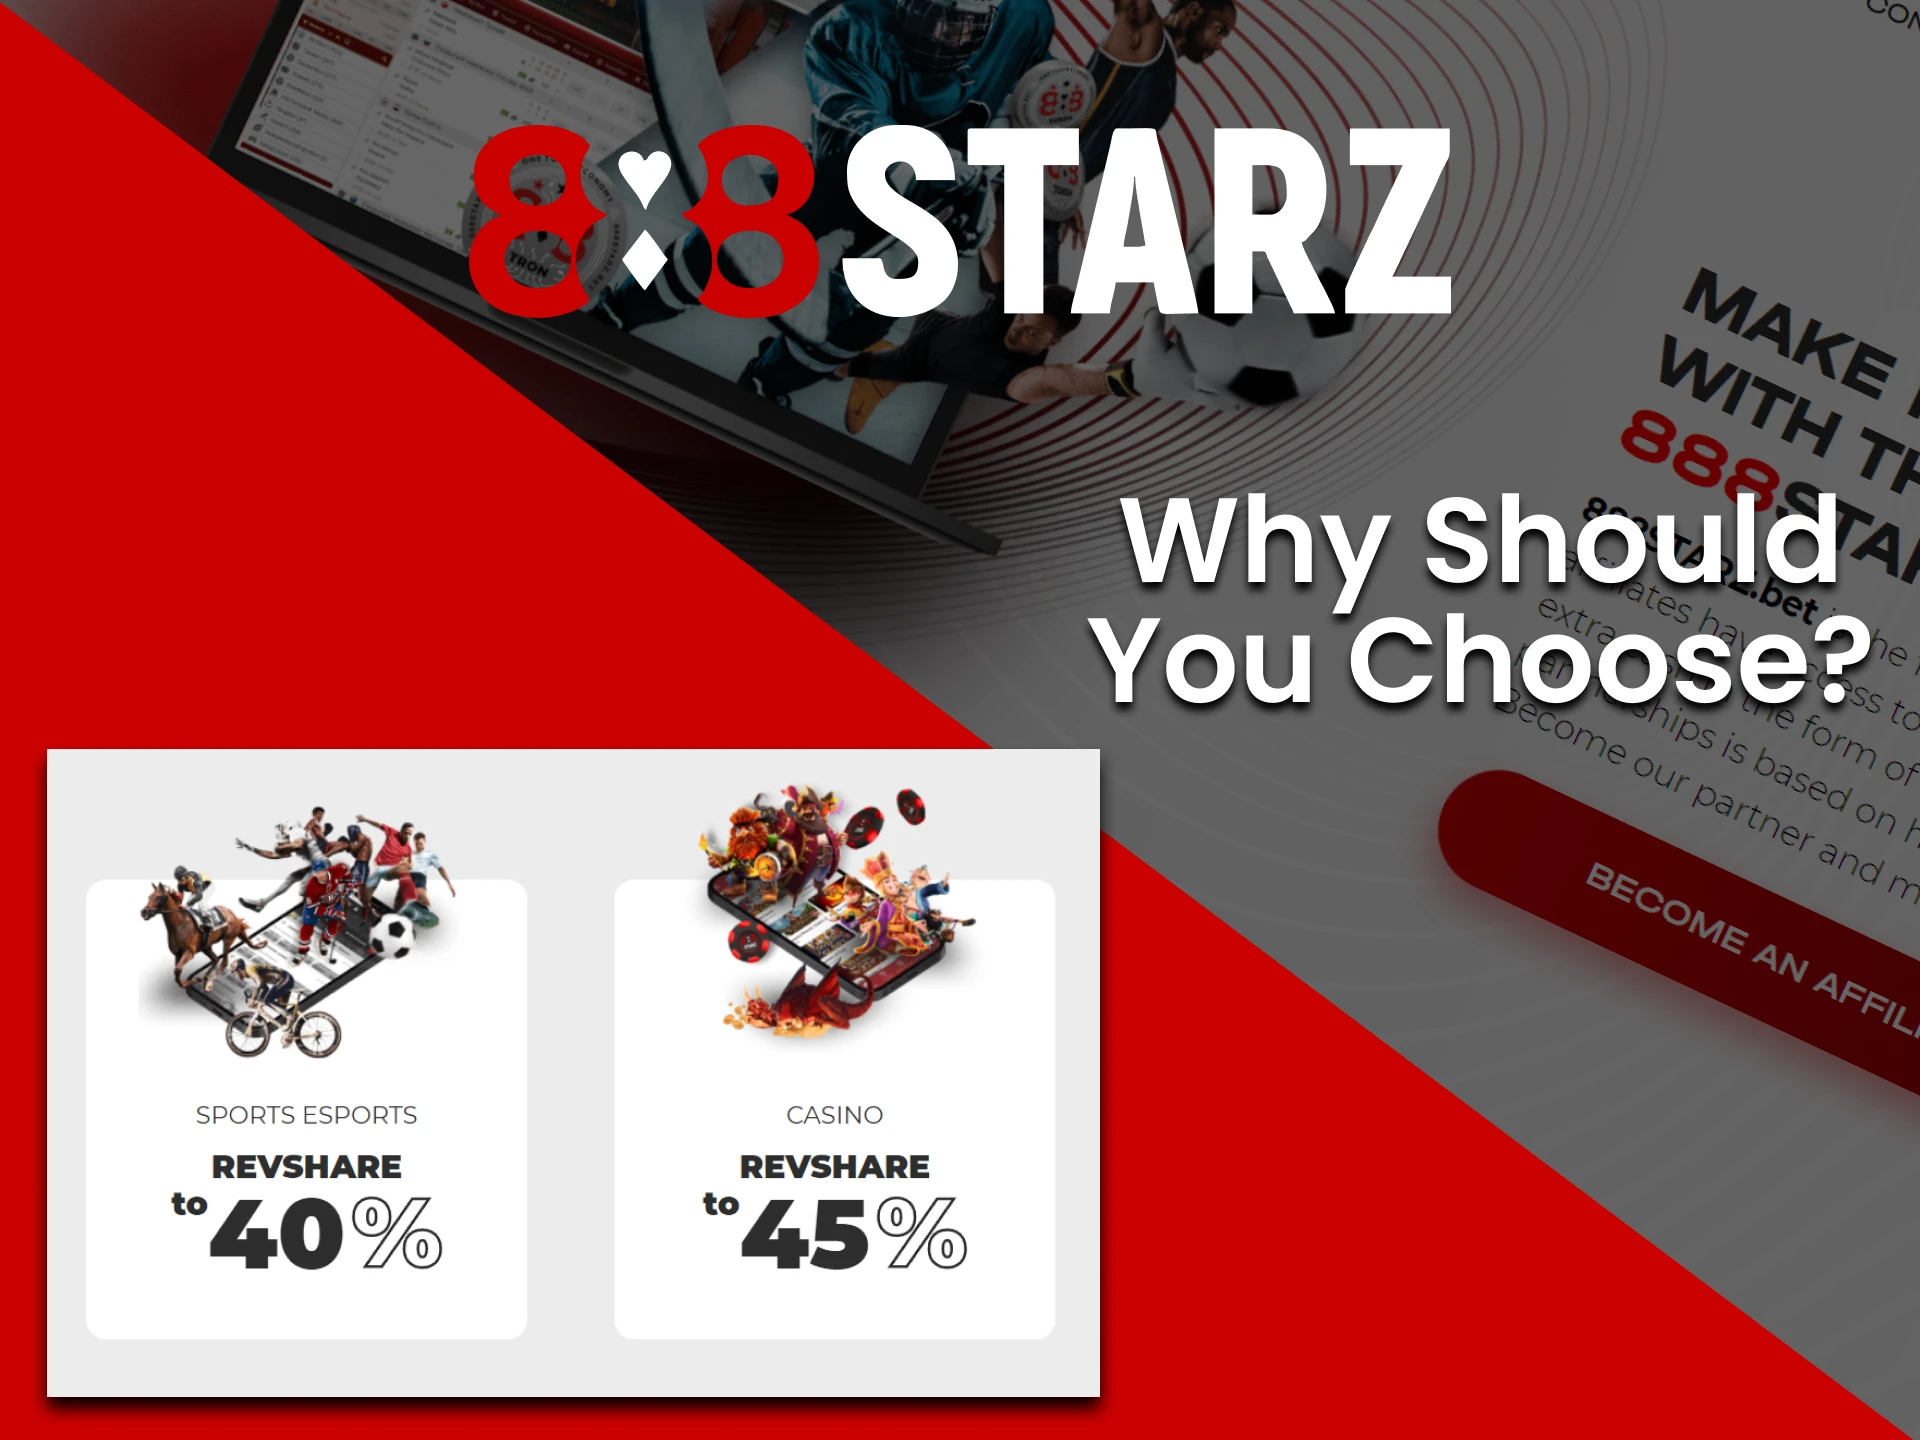 888starz provides huge variety of affiliate program bonuses.